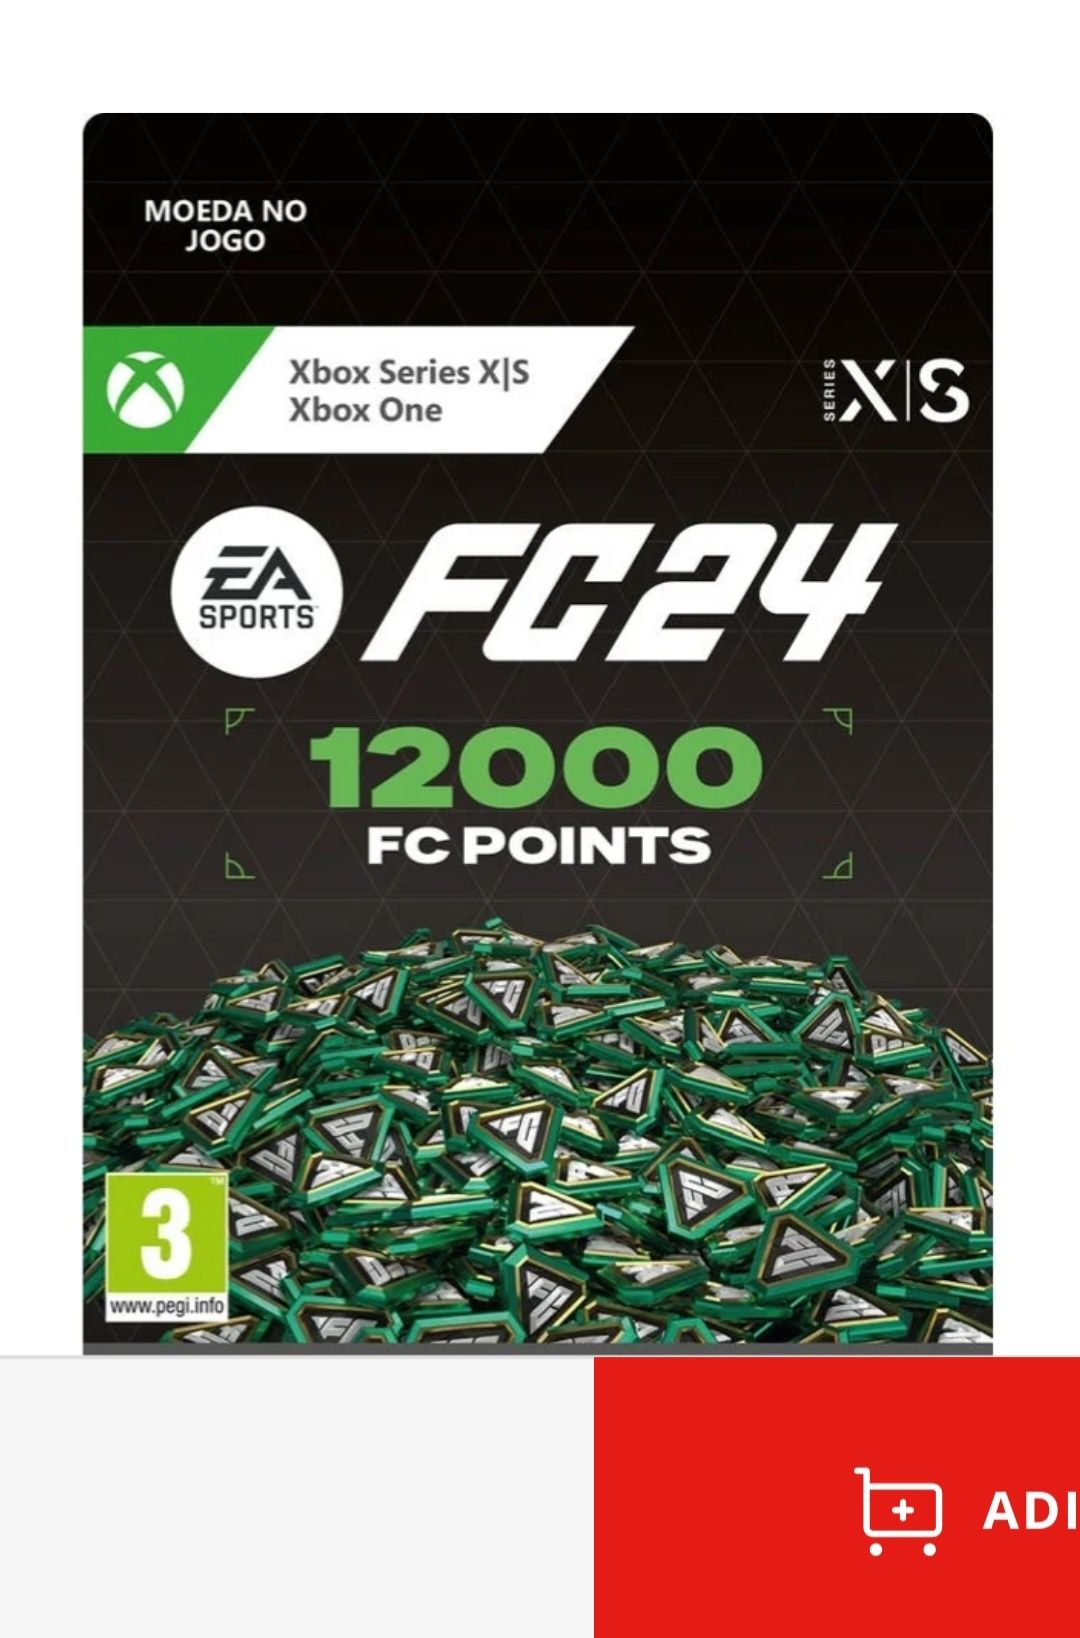 FC 24 Xbox Points 12 000